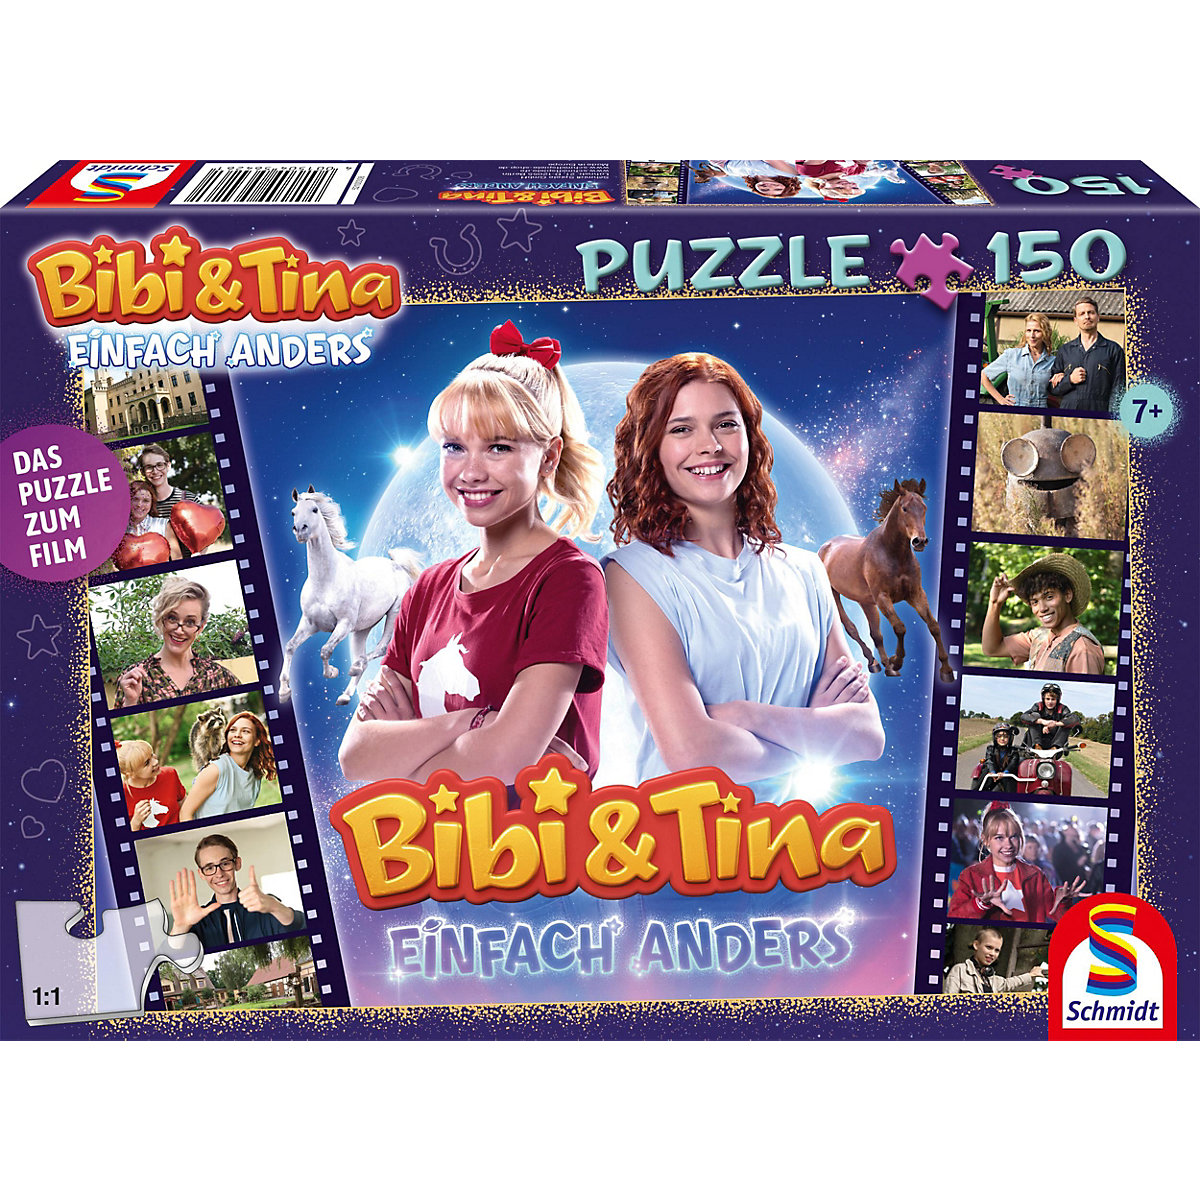 Puzzle Bibi&Tina Film 5 Einfach anders 150 Teile